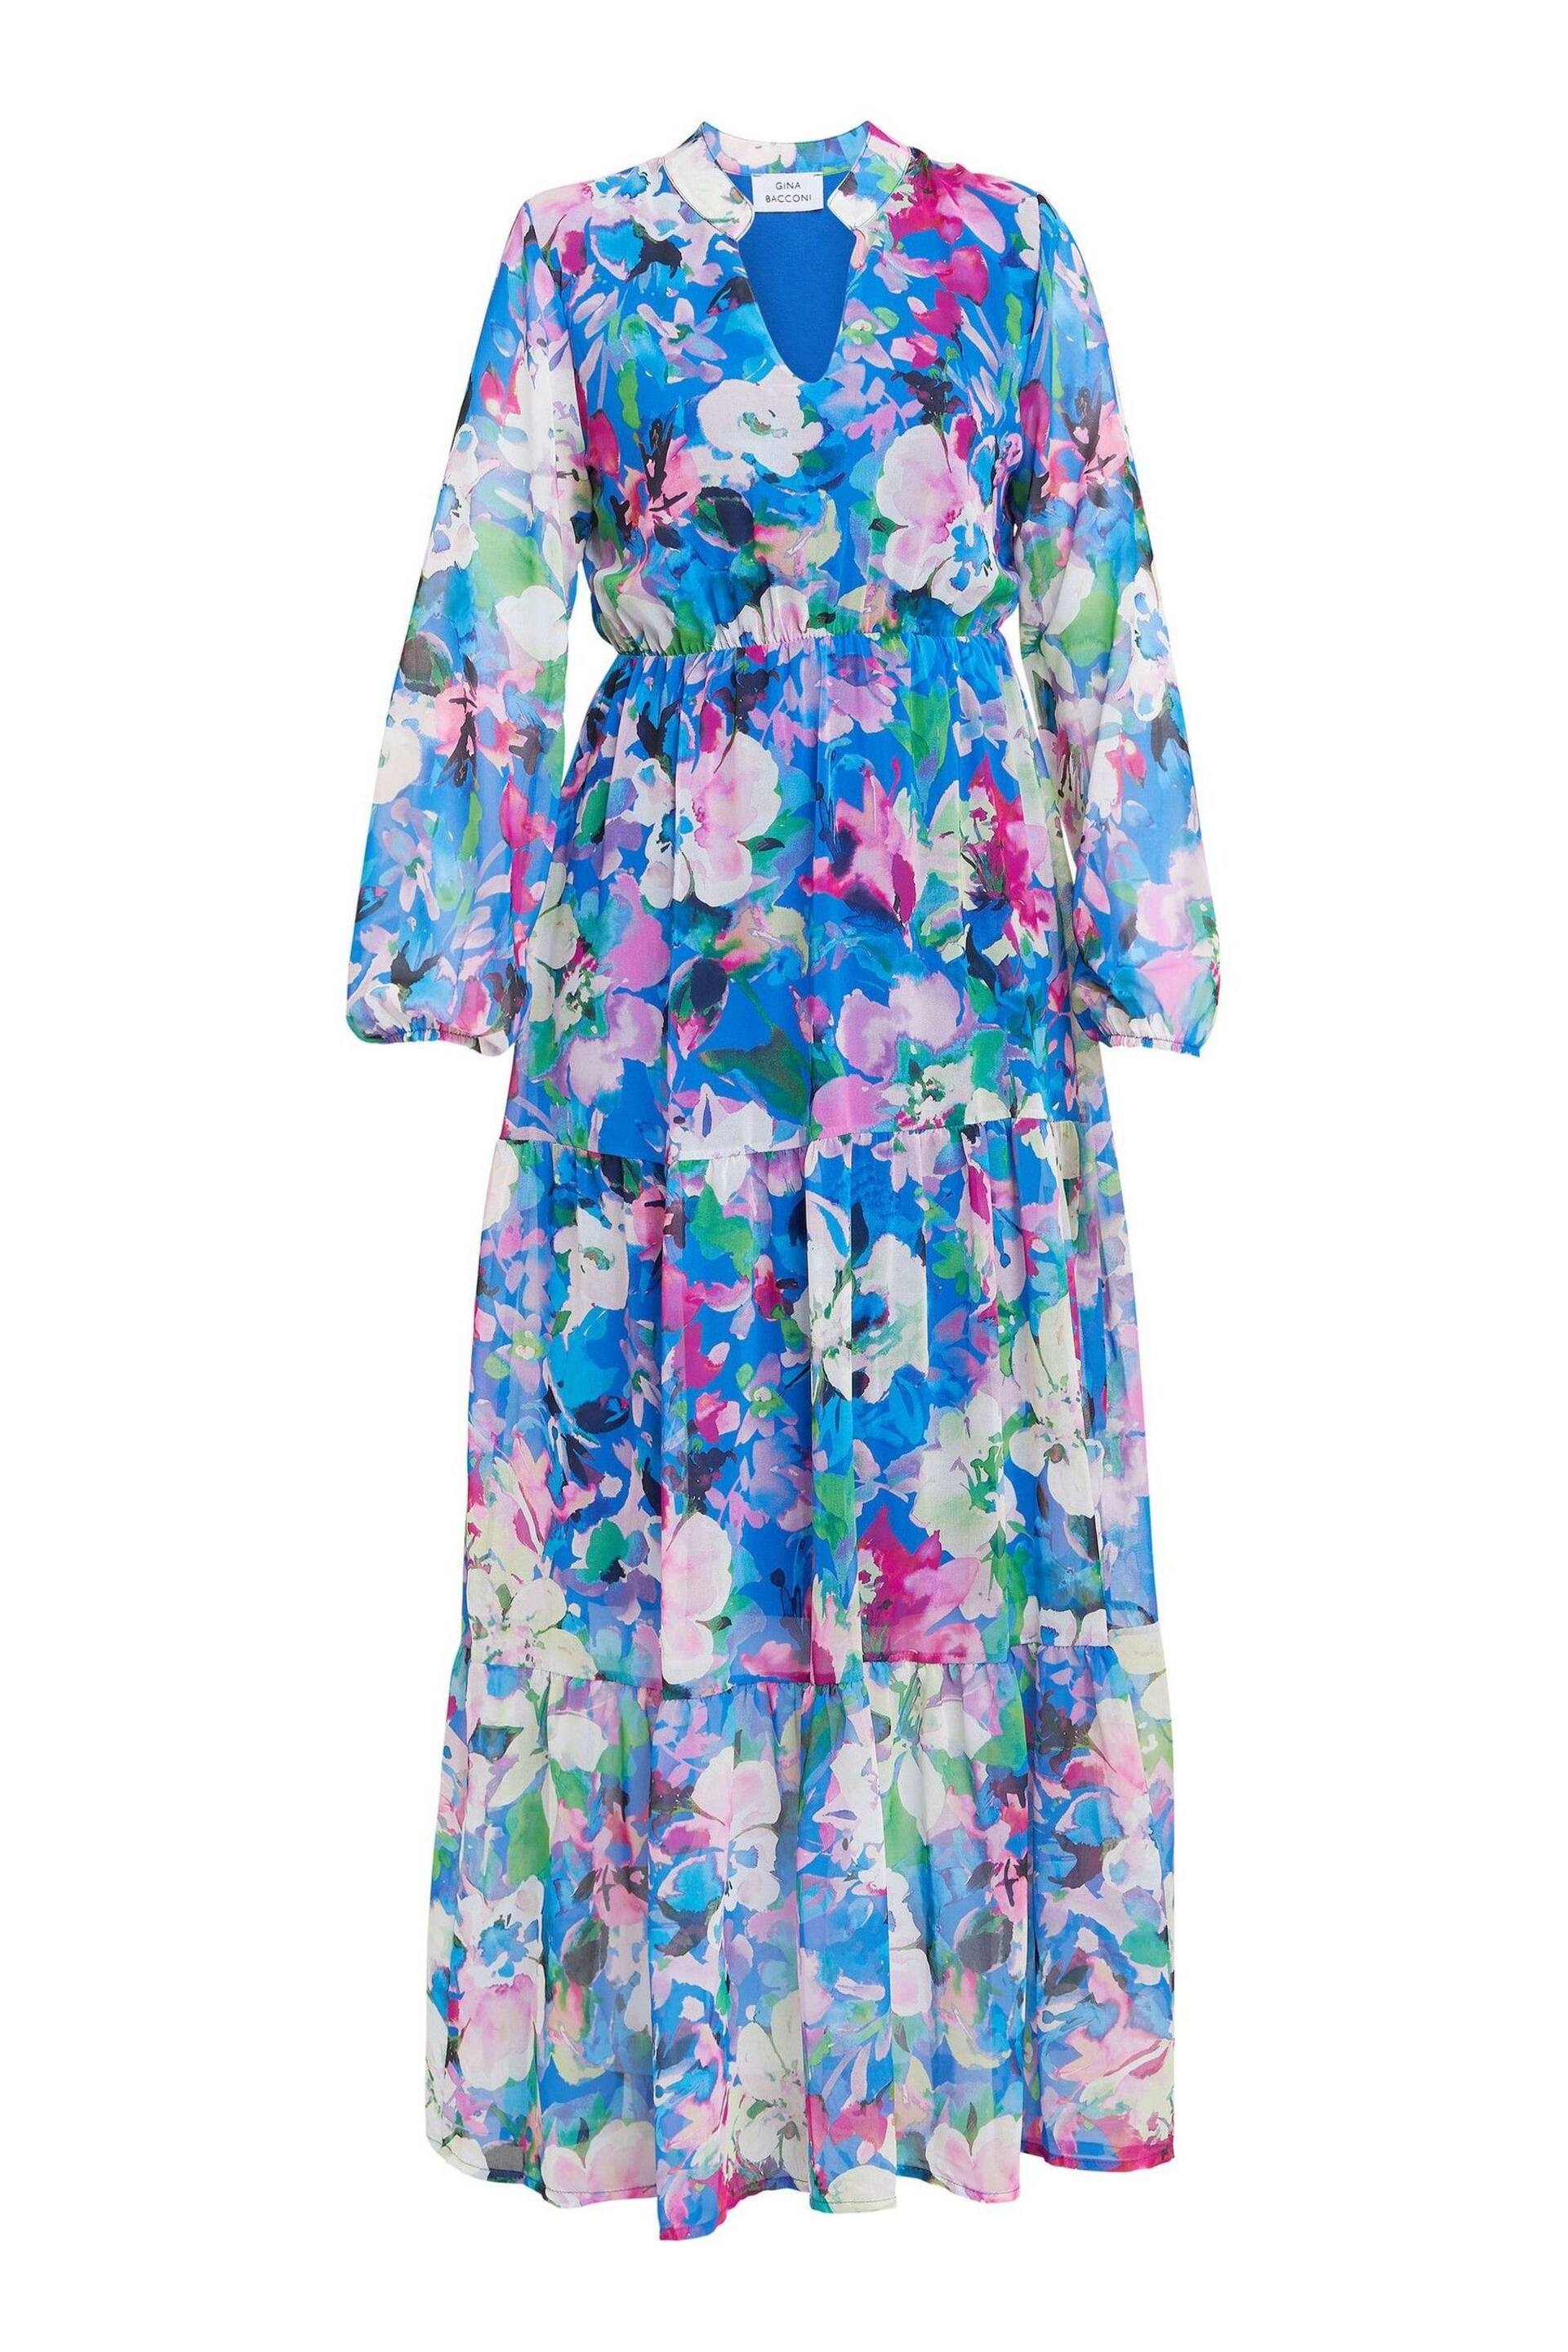 Gina Bacconi Blue Iona Print Stand Collar Dress - Image 5 of 5